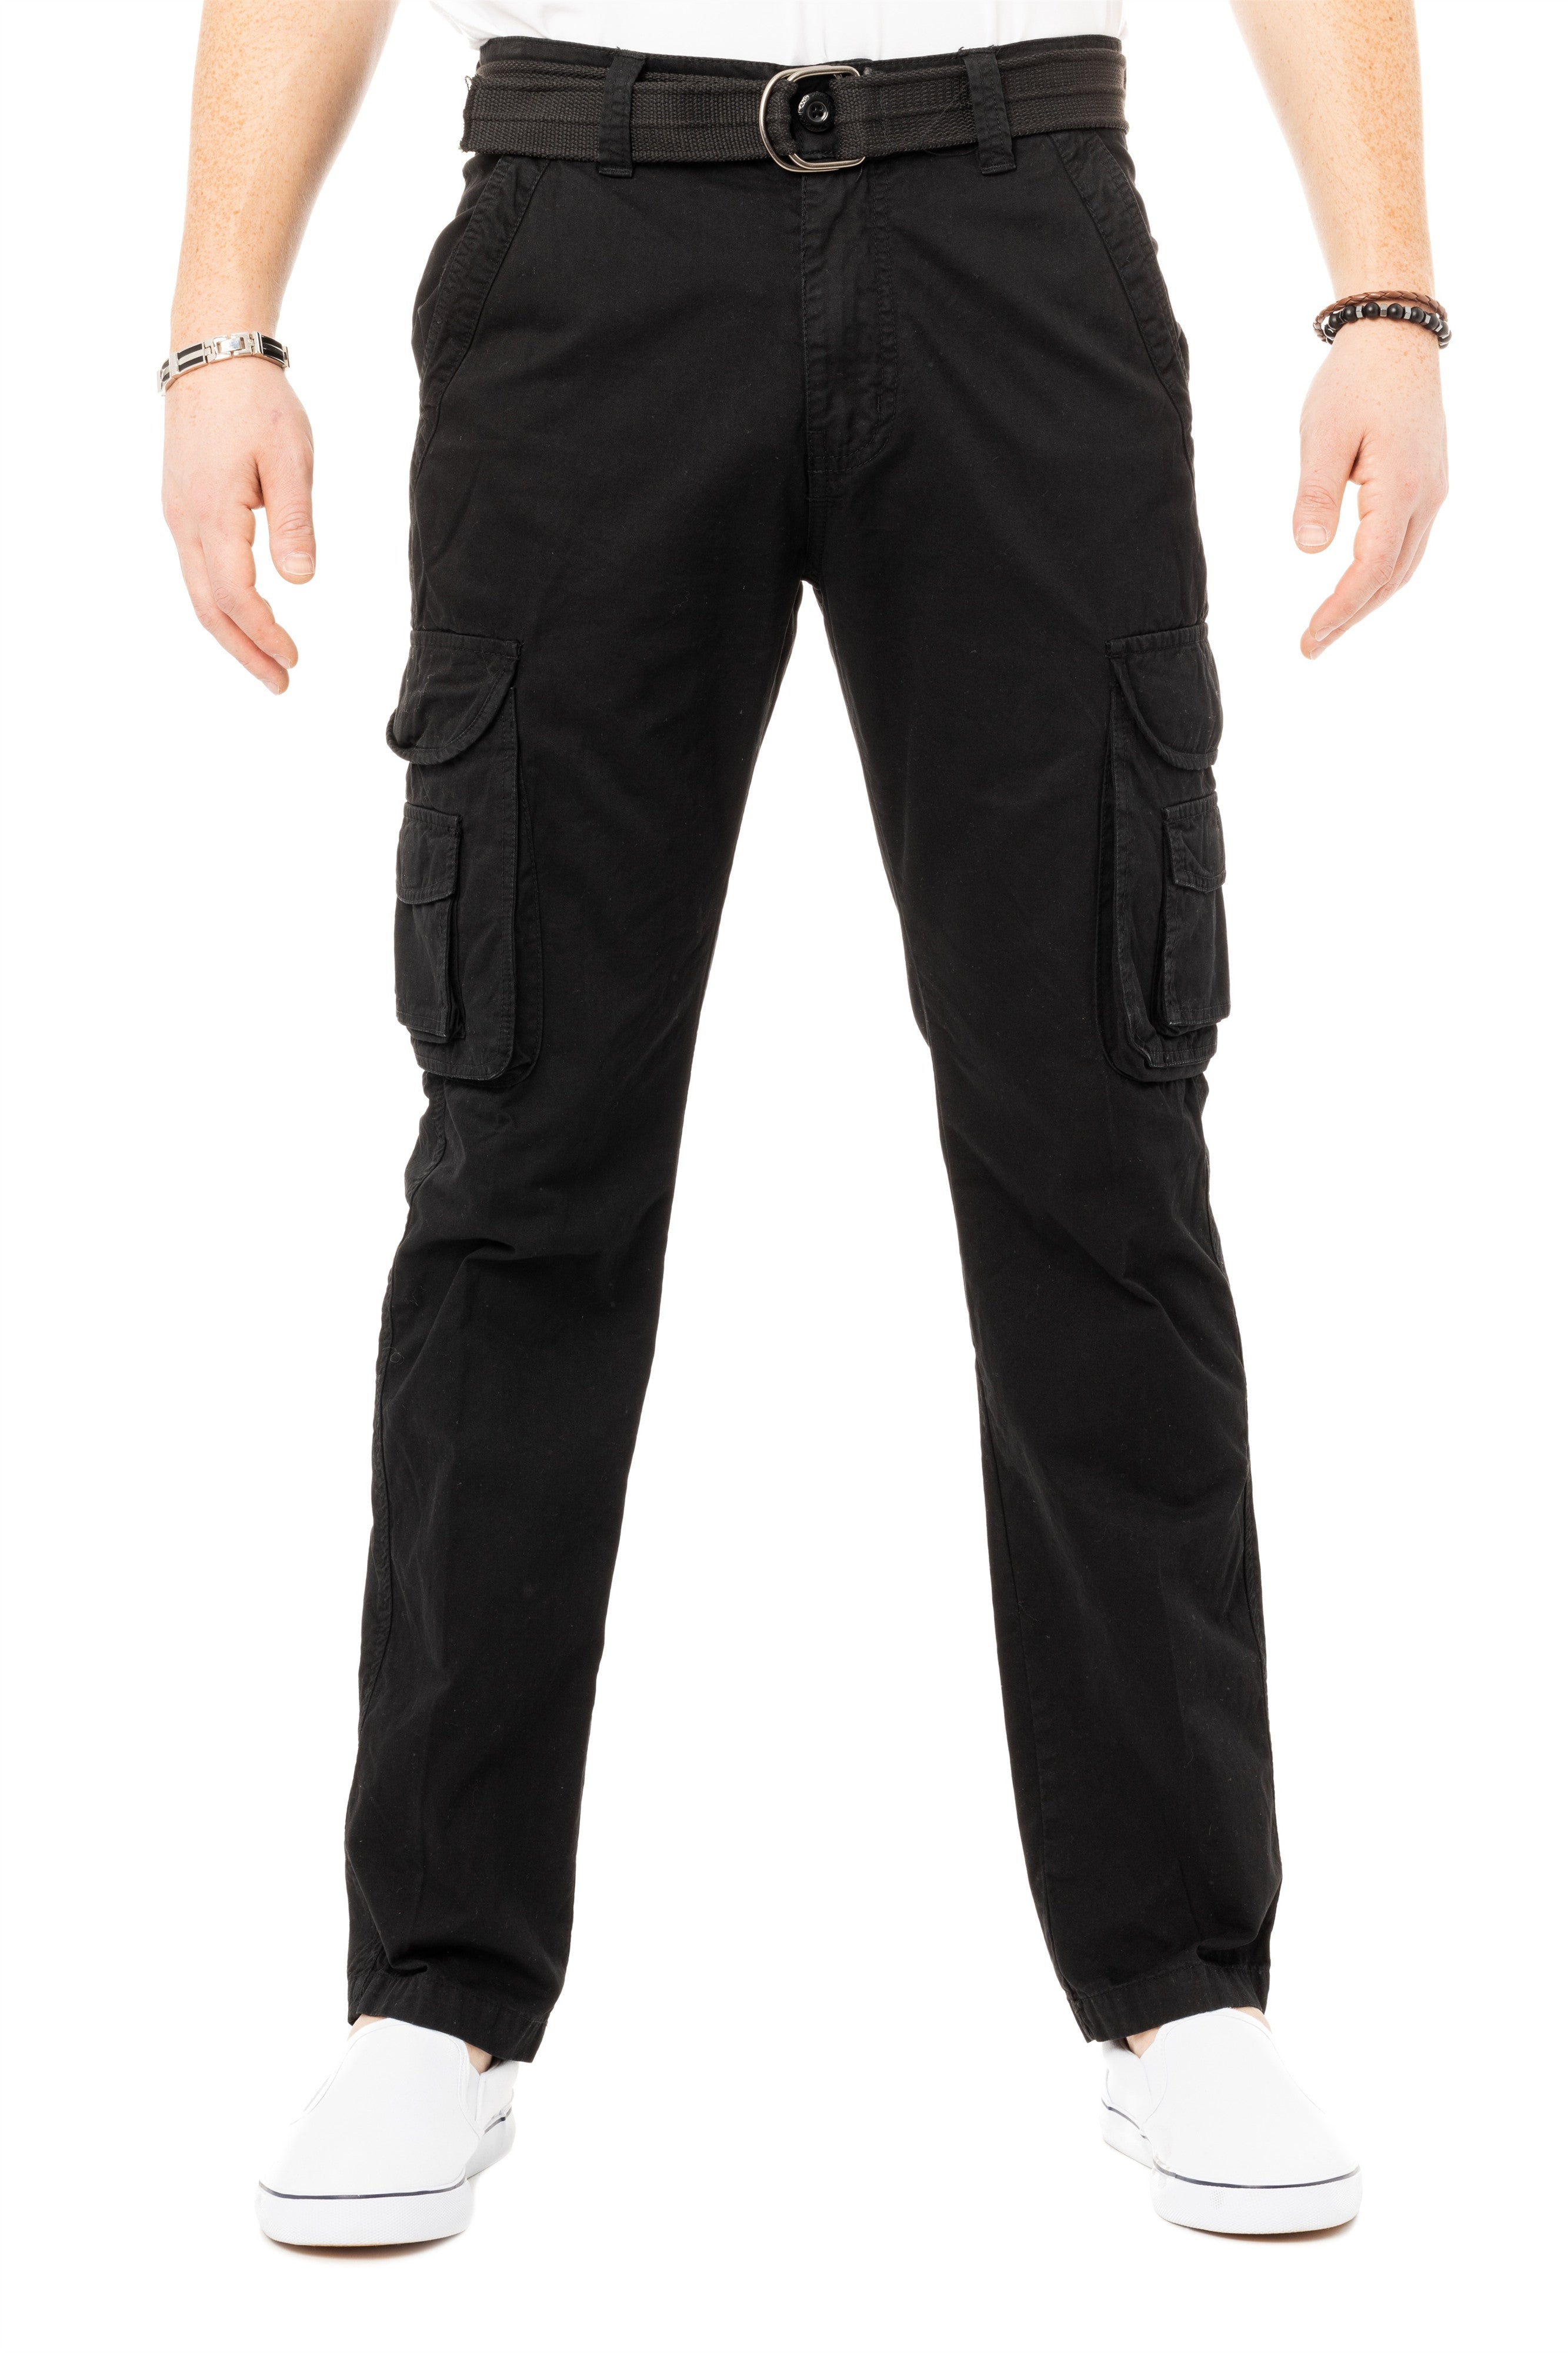 XMT-18003 | Men's Belted Cargo Pants